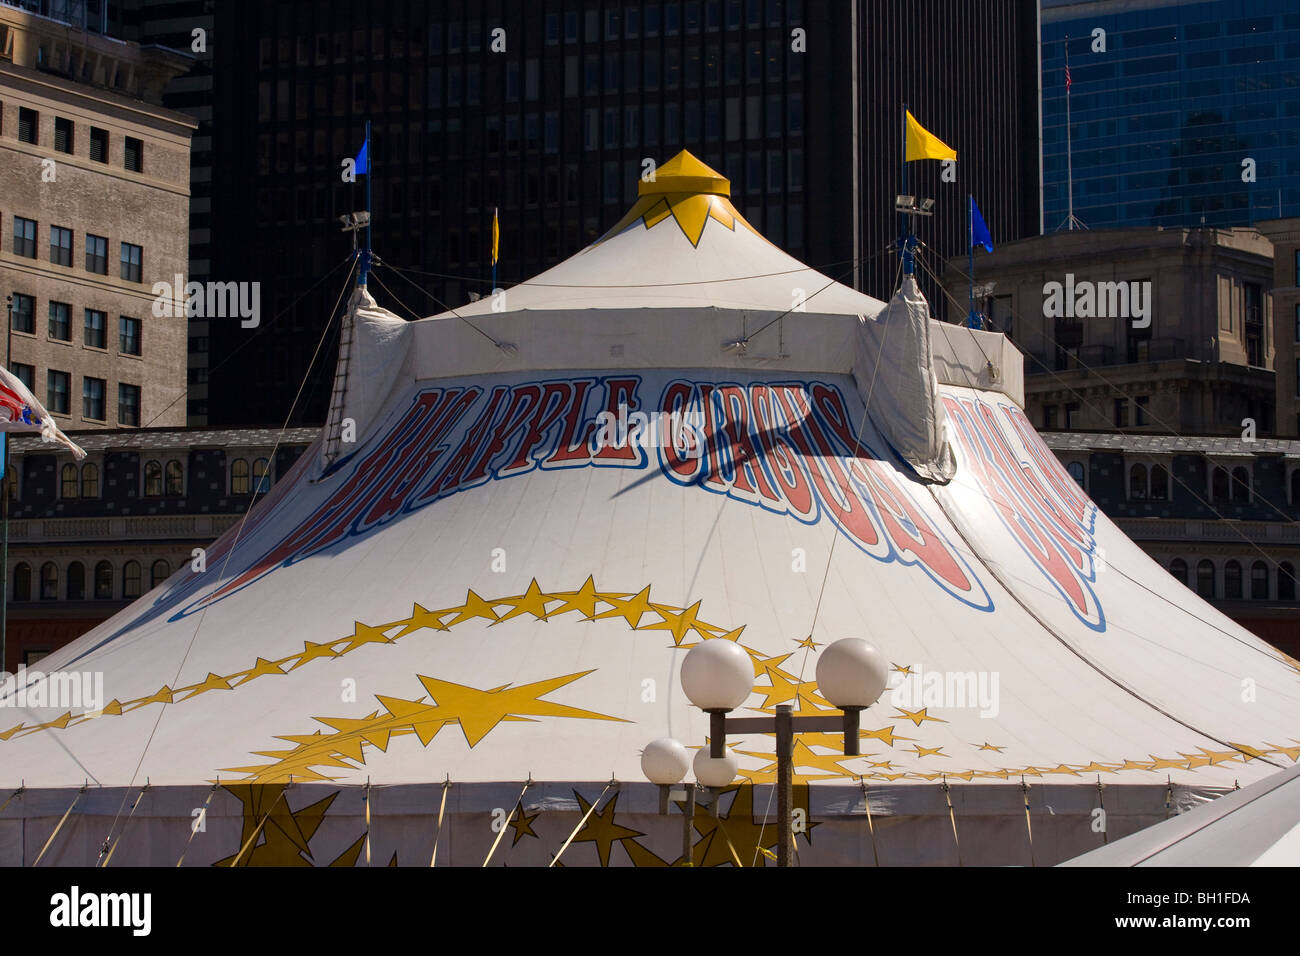 Big Apple Circus tent amongst skyscrapers in Government Center, Boston, Massachusetts. Stock Photo